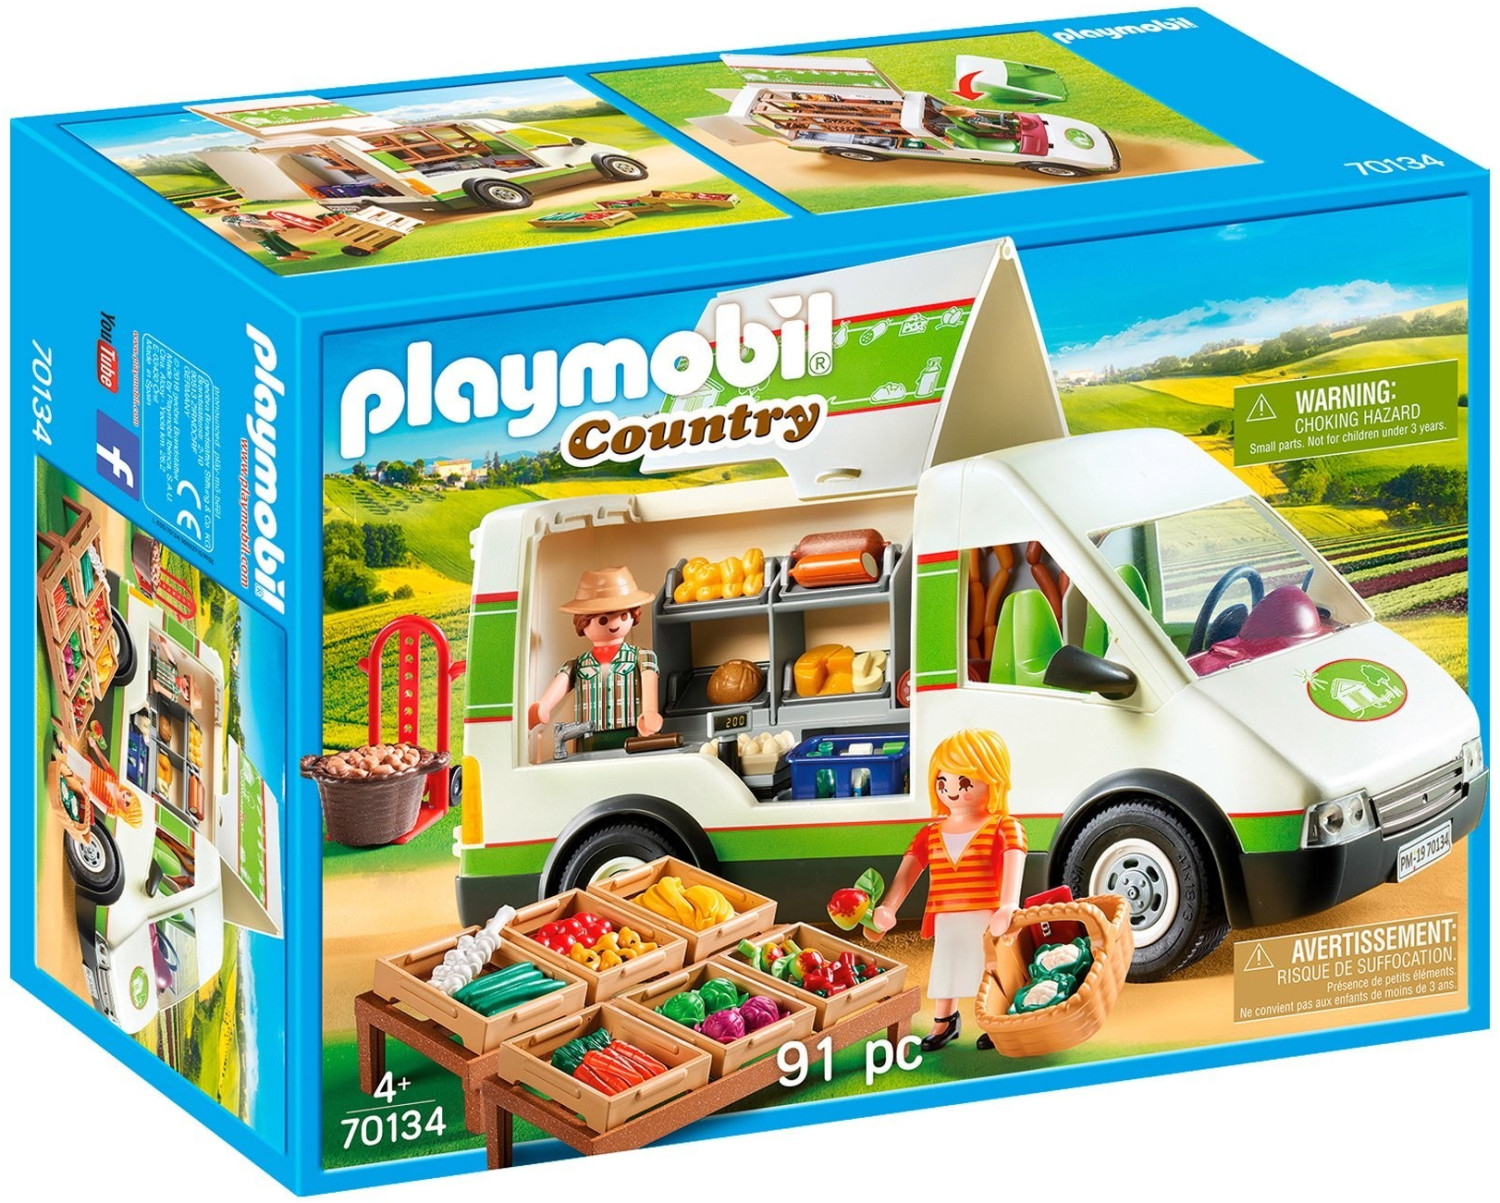 70134 - Playmobil Country - Camion de marché Playmobil : King Jouet, Playmobil  Playmobil - Jeux d'imitation & Mondes imaginaires